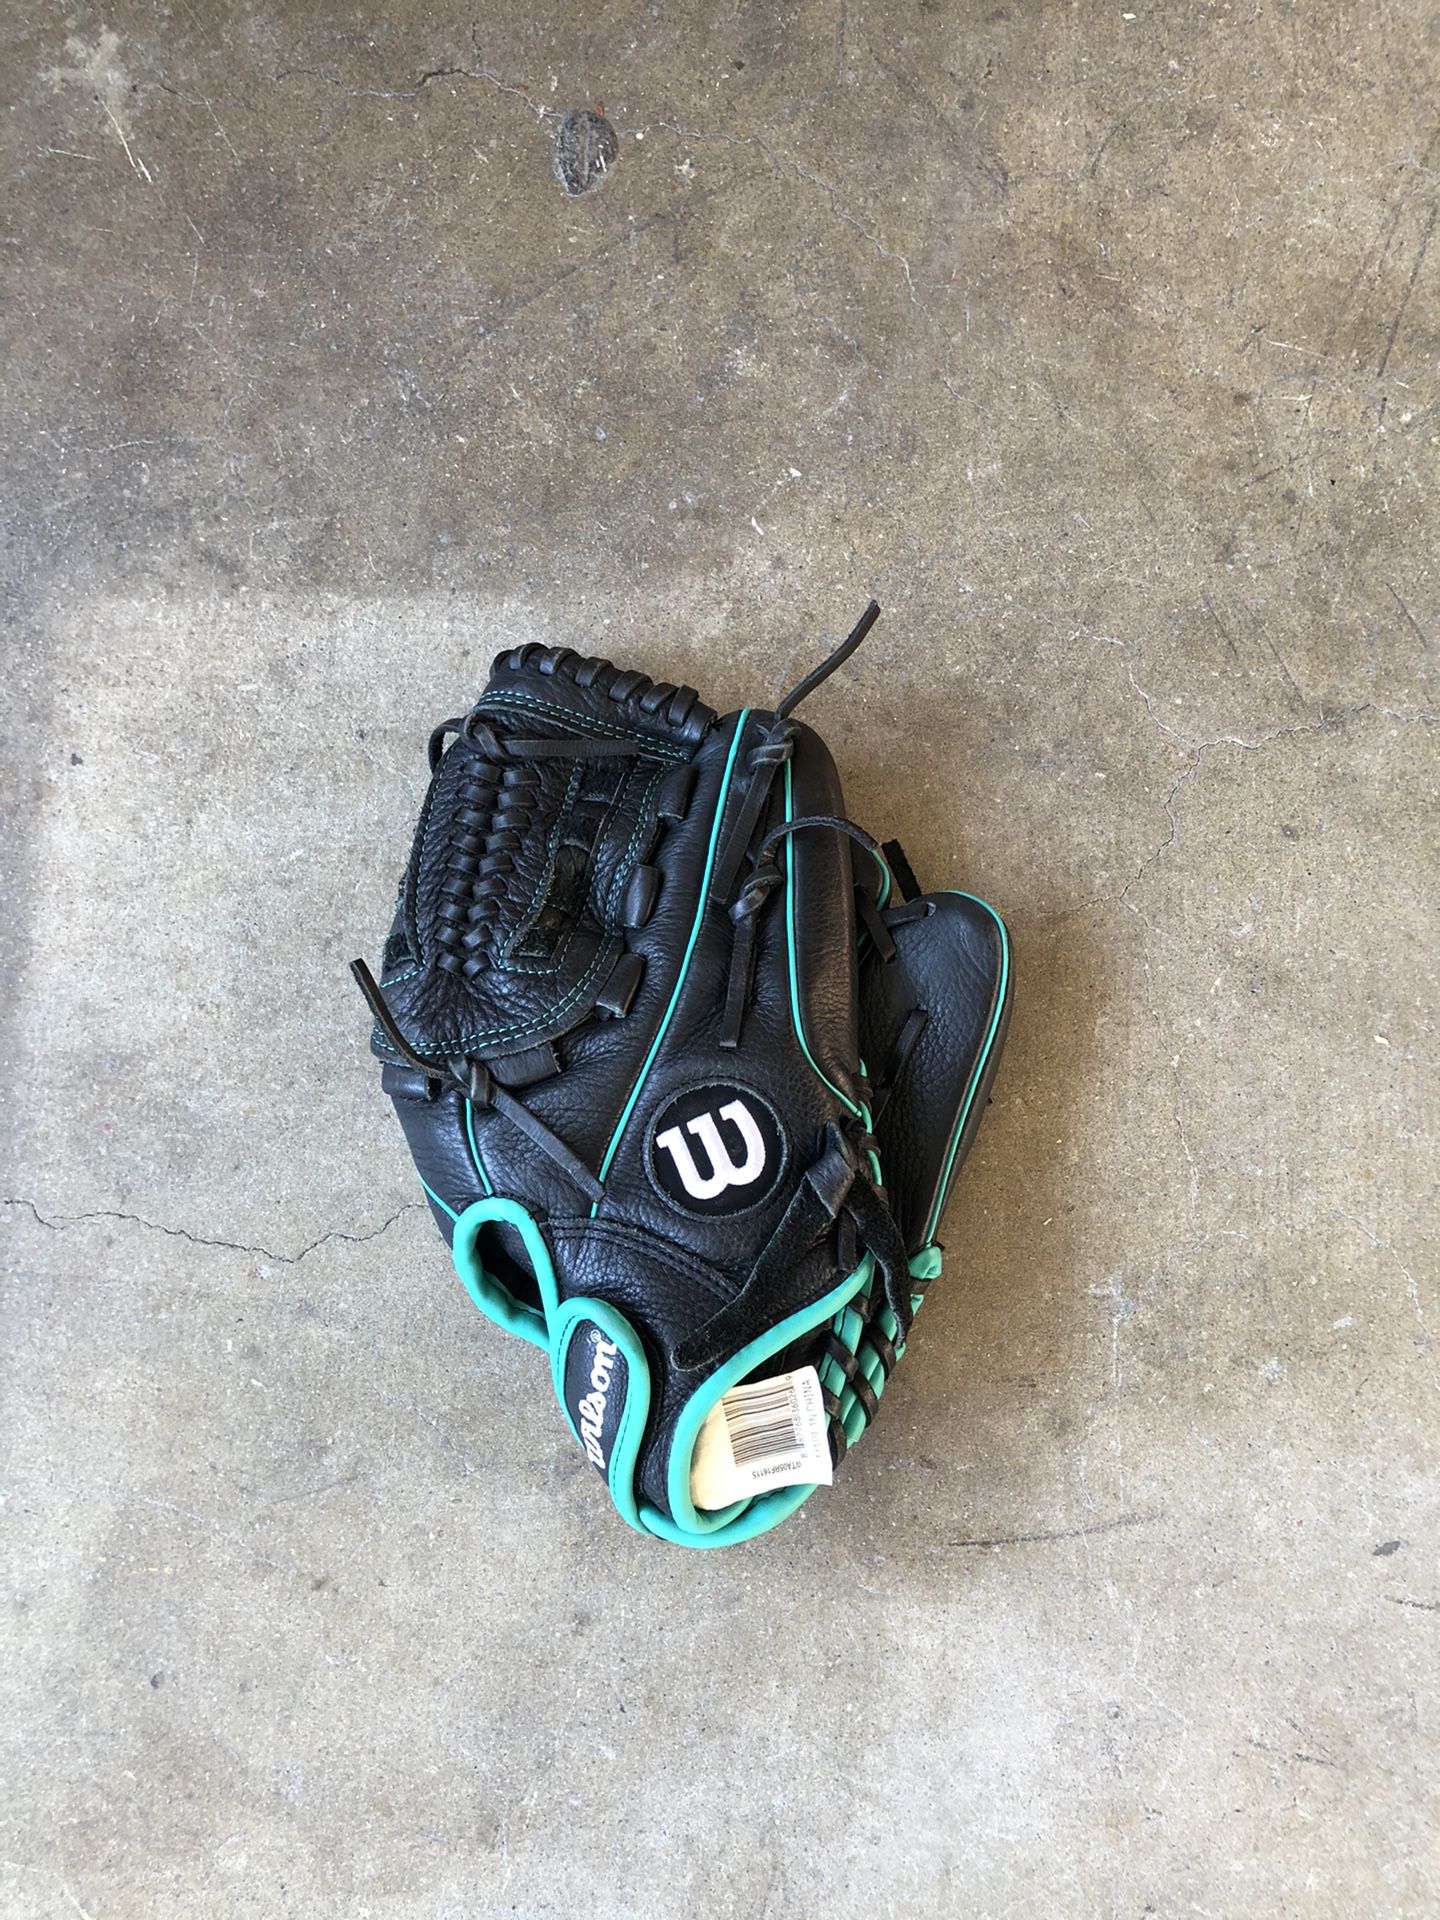 wilson softball glove